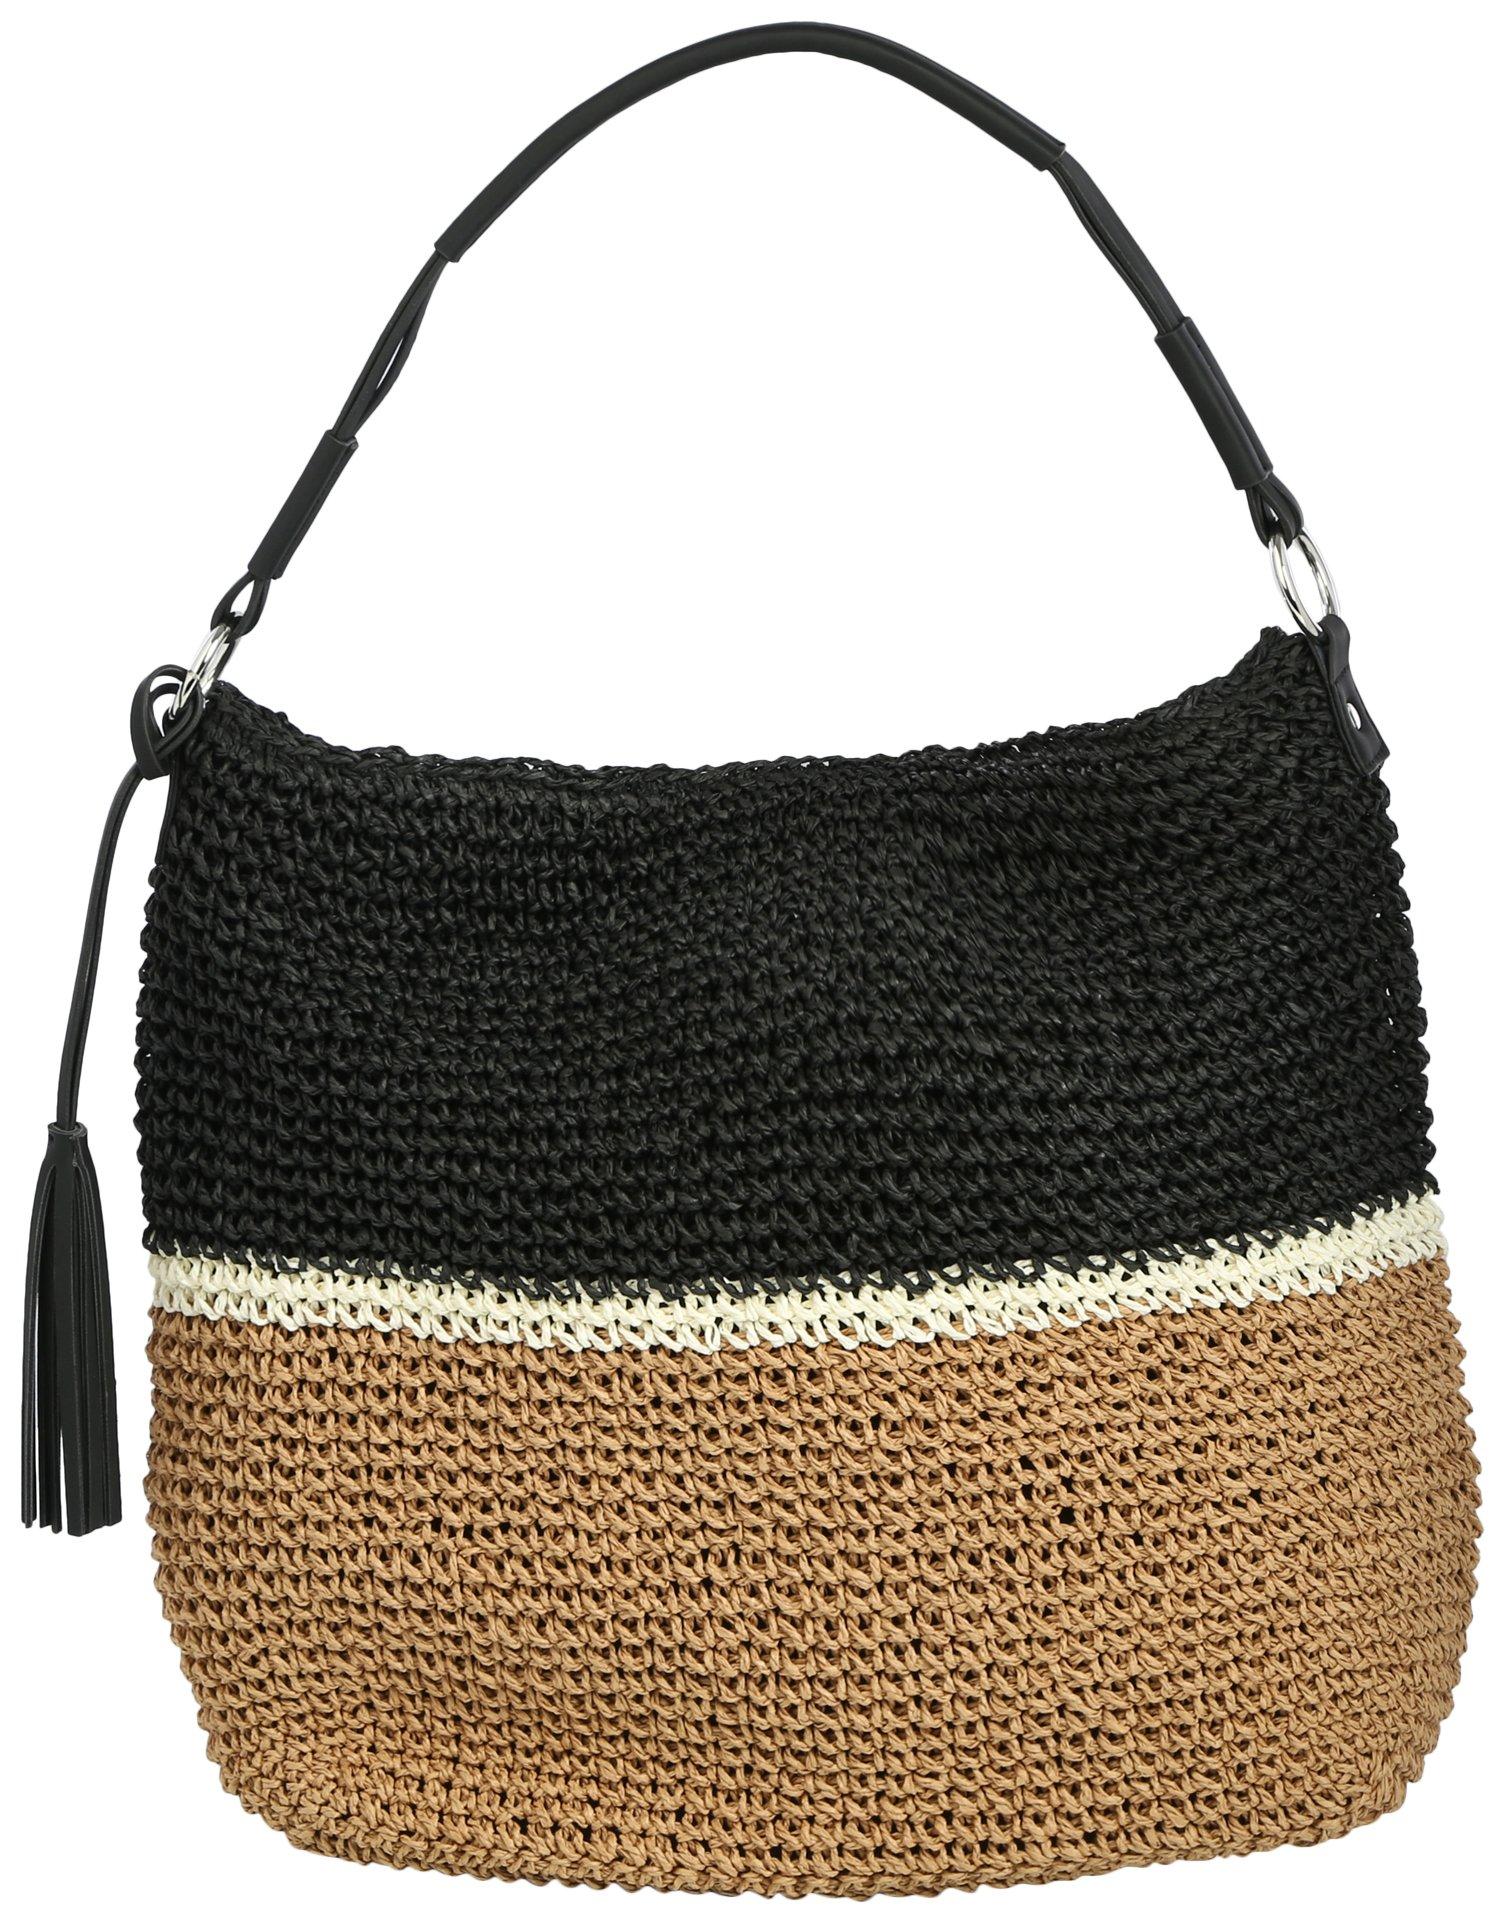 Straw Studios Stripe Crochet Beach Tote Bag